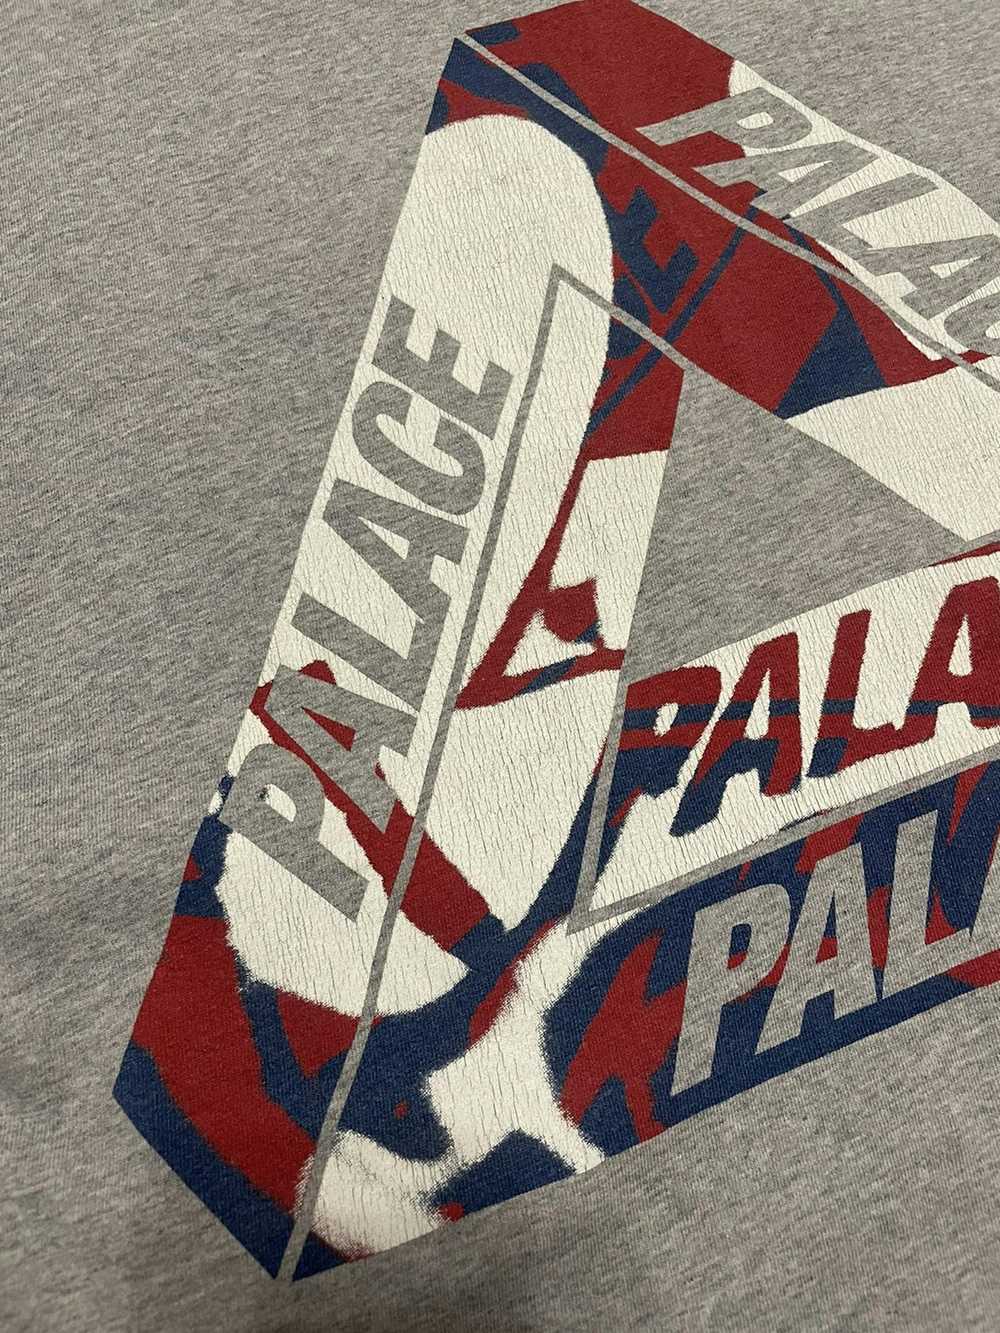 Palace Palace Tri-Ferg T-Shirt Rare - image 3